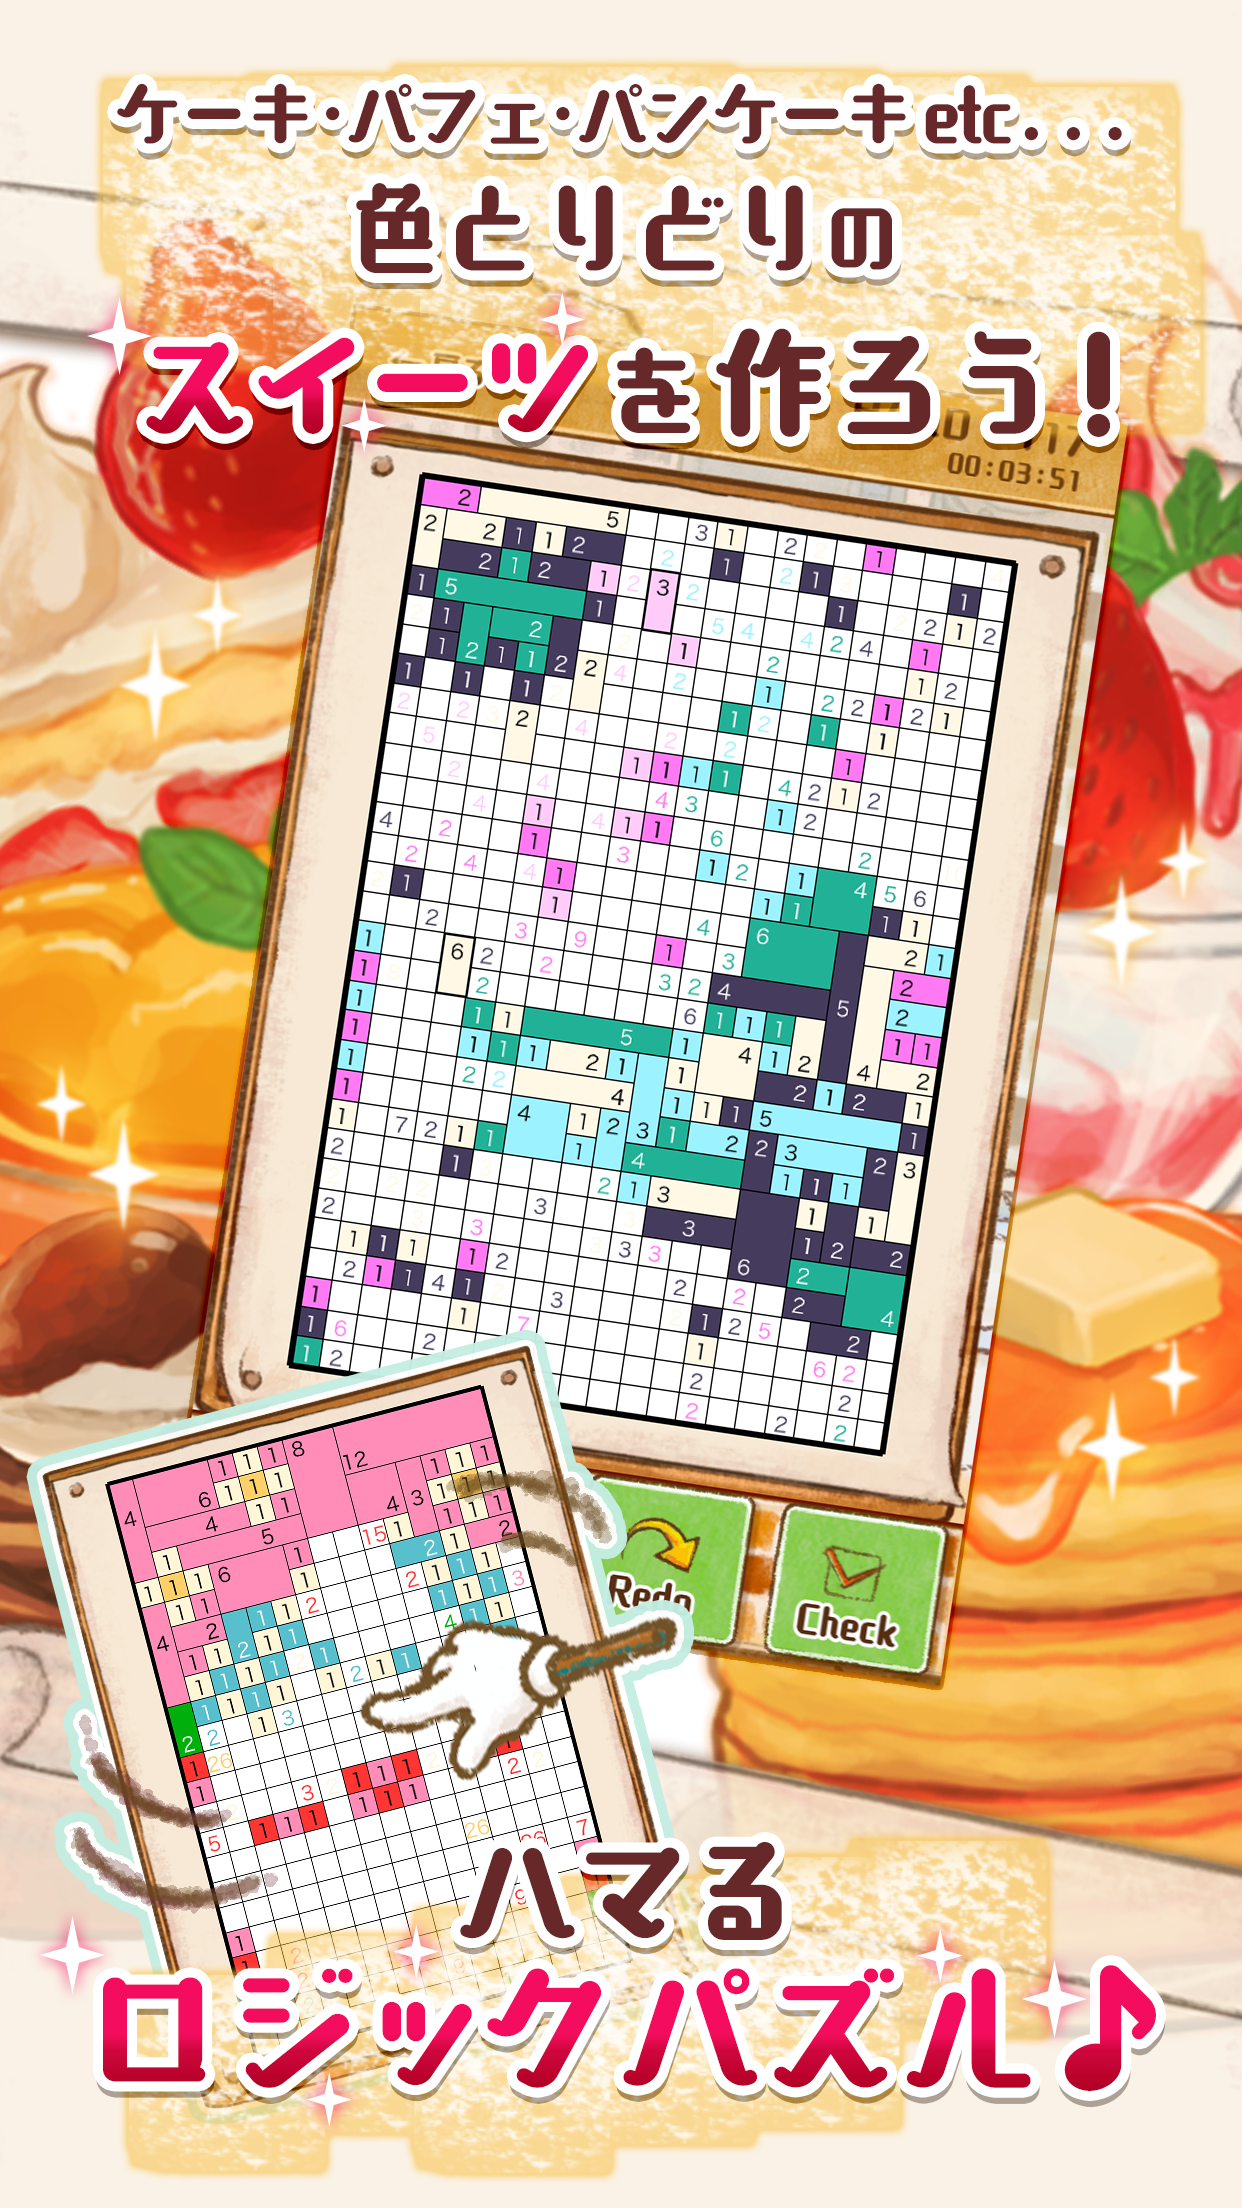 Screenshot 1 of ROSE Confectionery (permainan puzzle dan teka-teki silang) 1.0.2